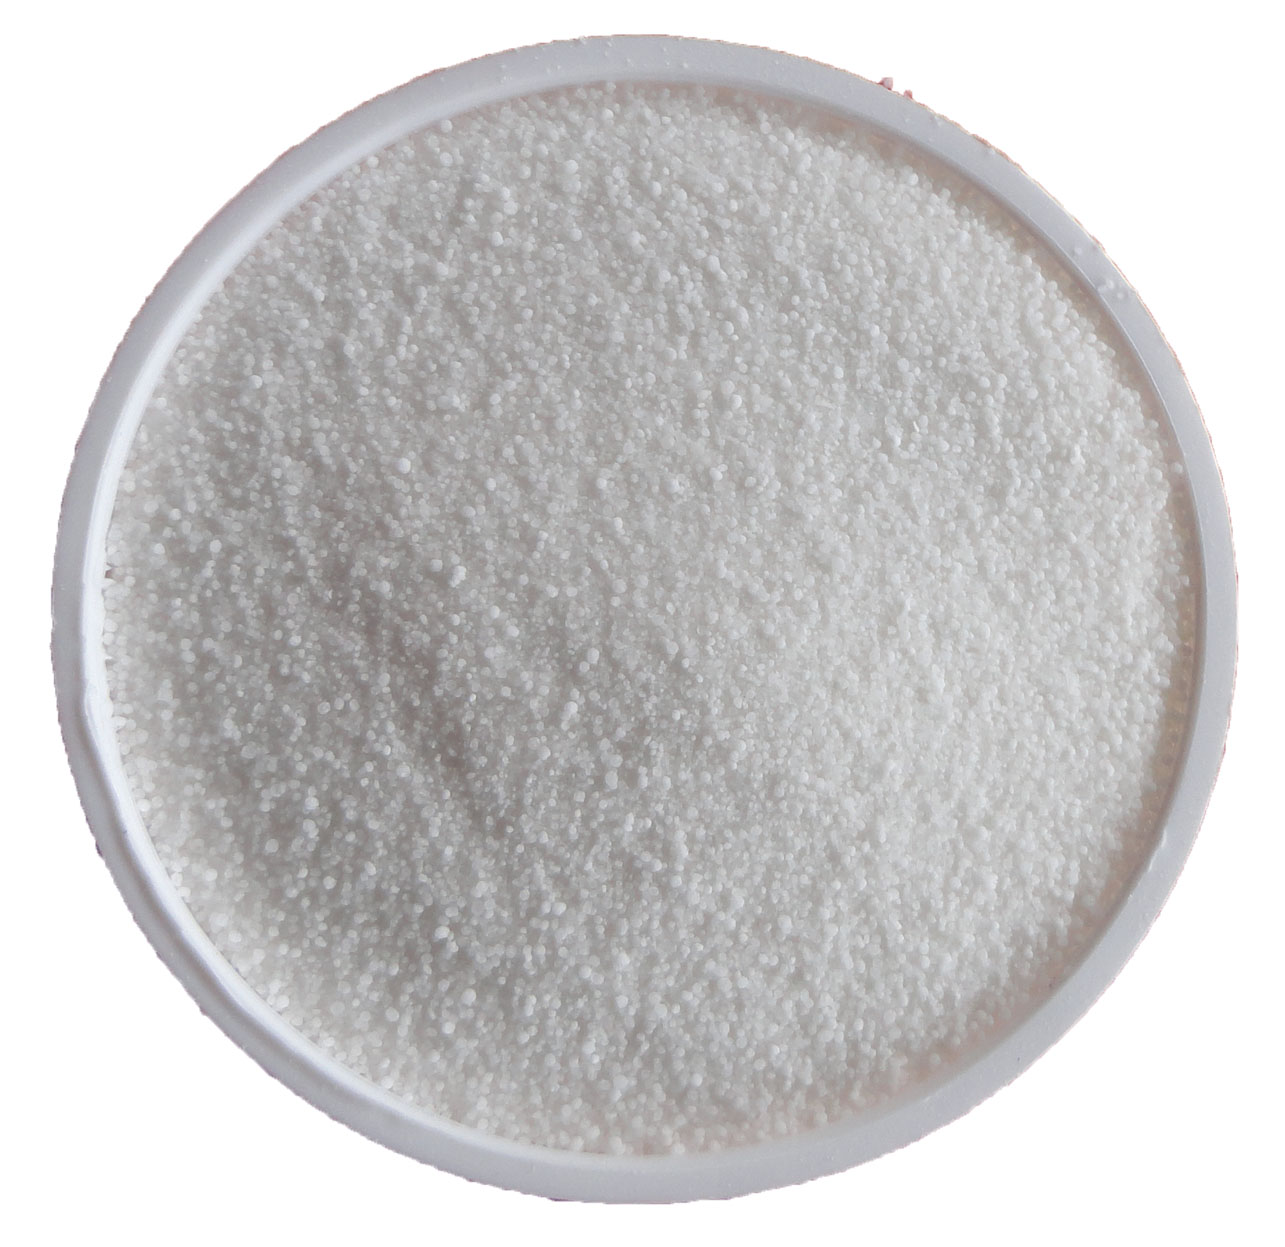 Kalmi Shora (Potassium Nitrate)